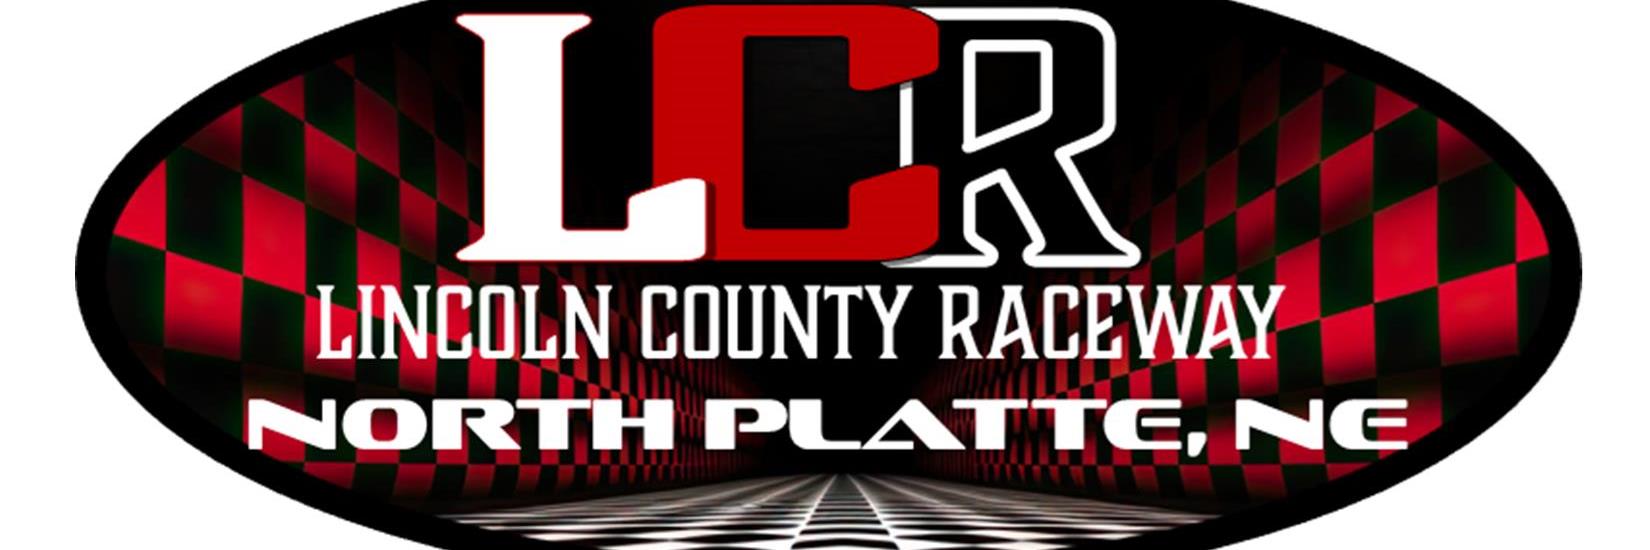 6/4/2016 - Lincoln County Raceway